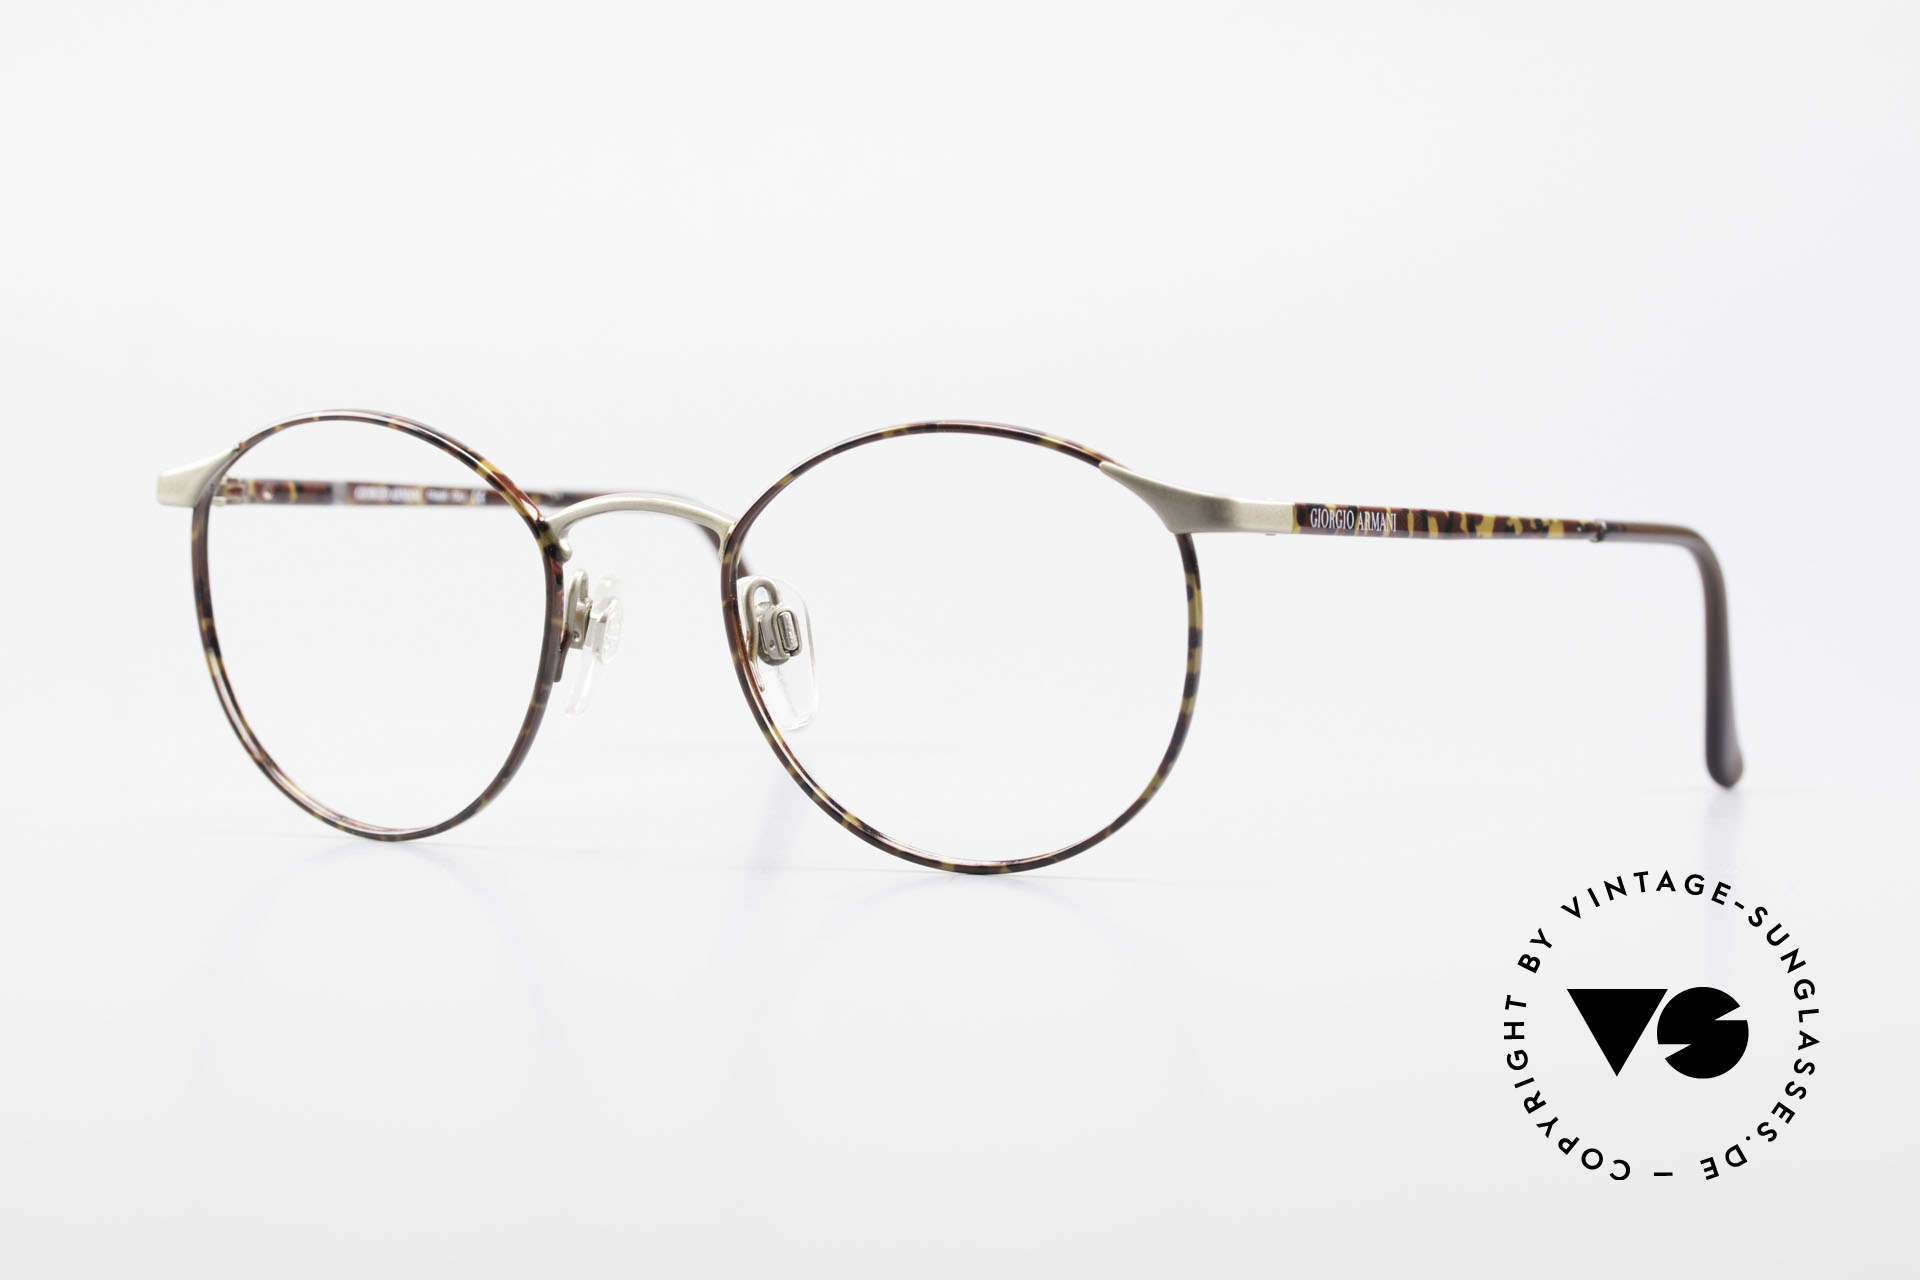 Giorgio Armani 163 Small Panto Eyeglass-Frame, timeless vintage Giorgio Armani designer eyeglasses, Made for Men and Women